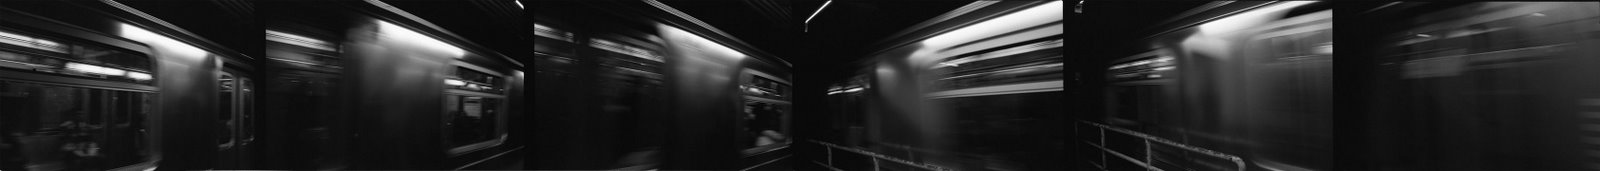 [nyc-train-11web-size.jpg]